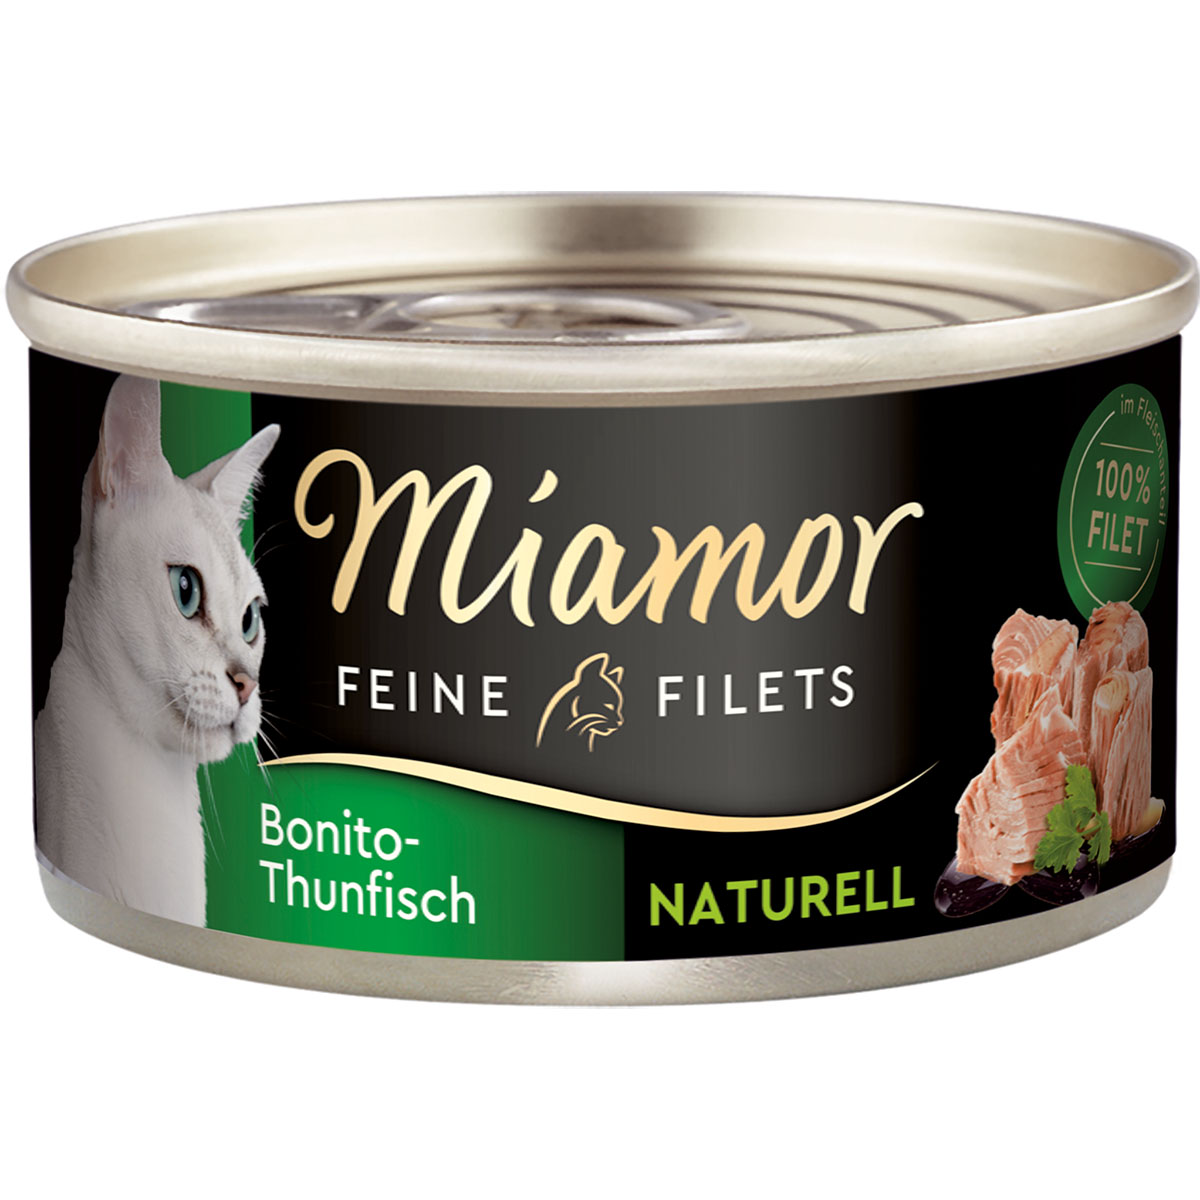 Miamor Feine Filets Naturelle Bonito tuňák 48× 80 g